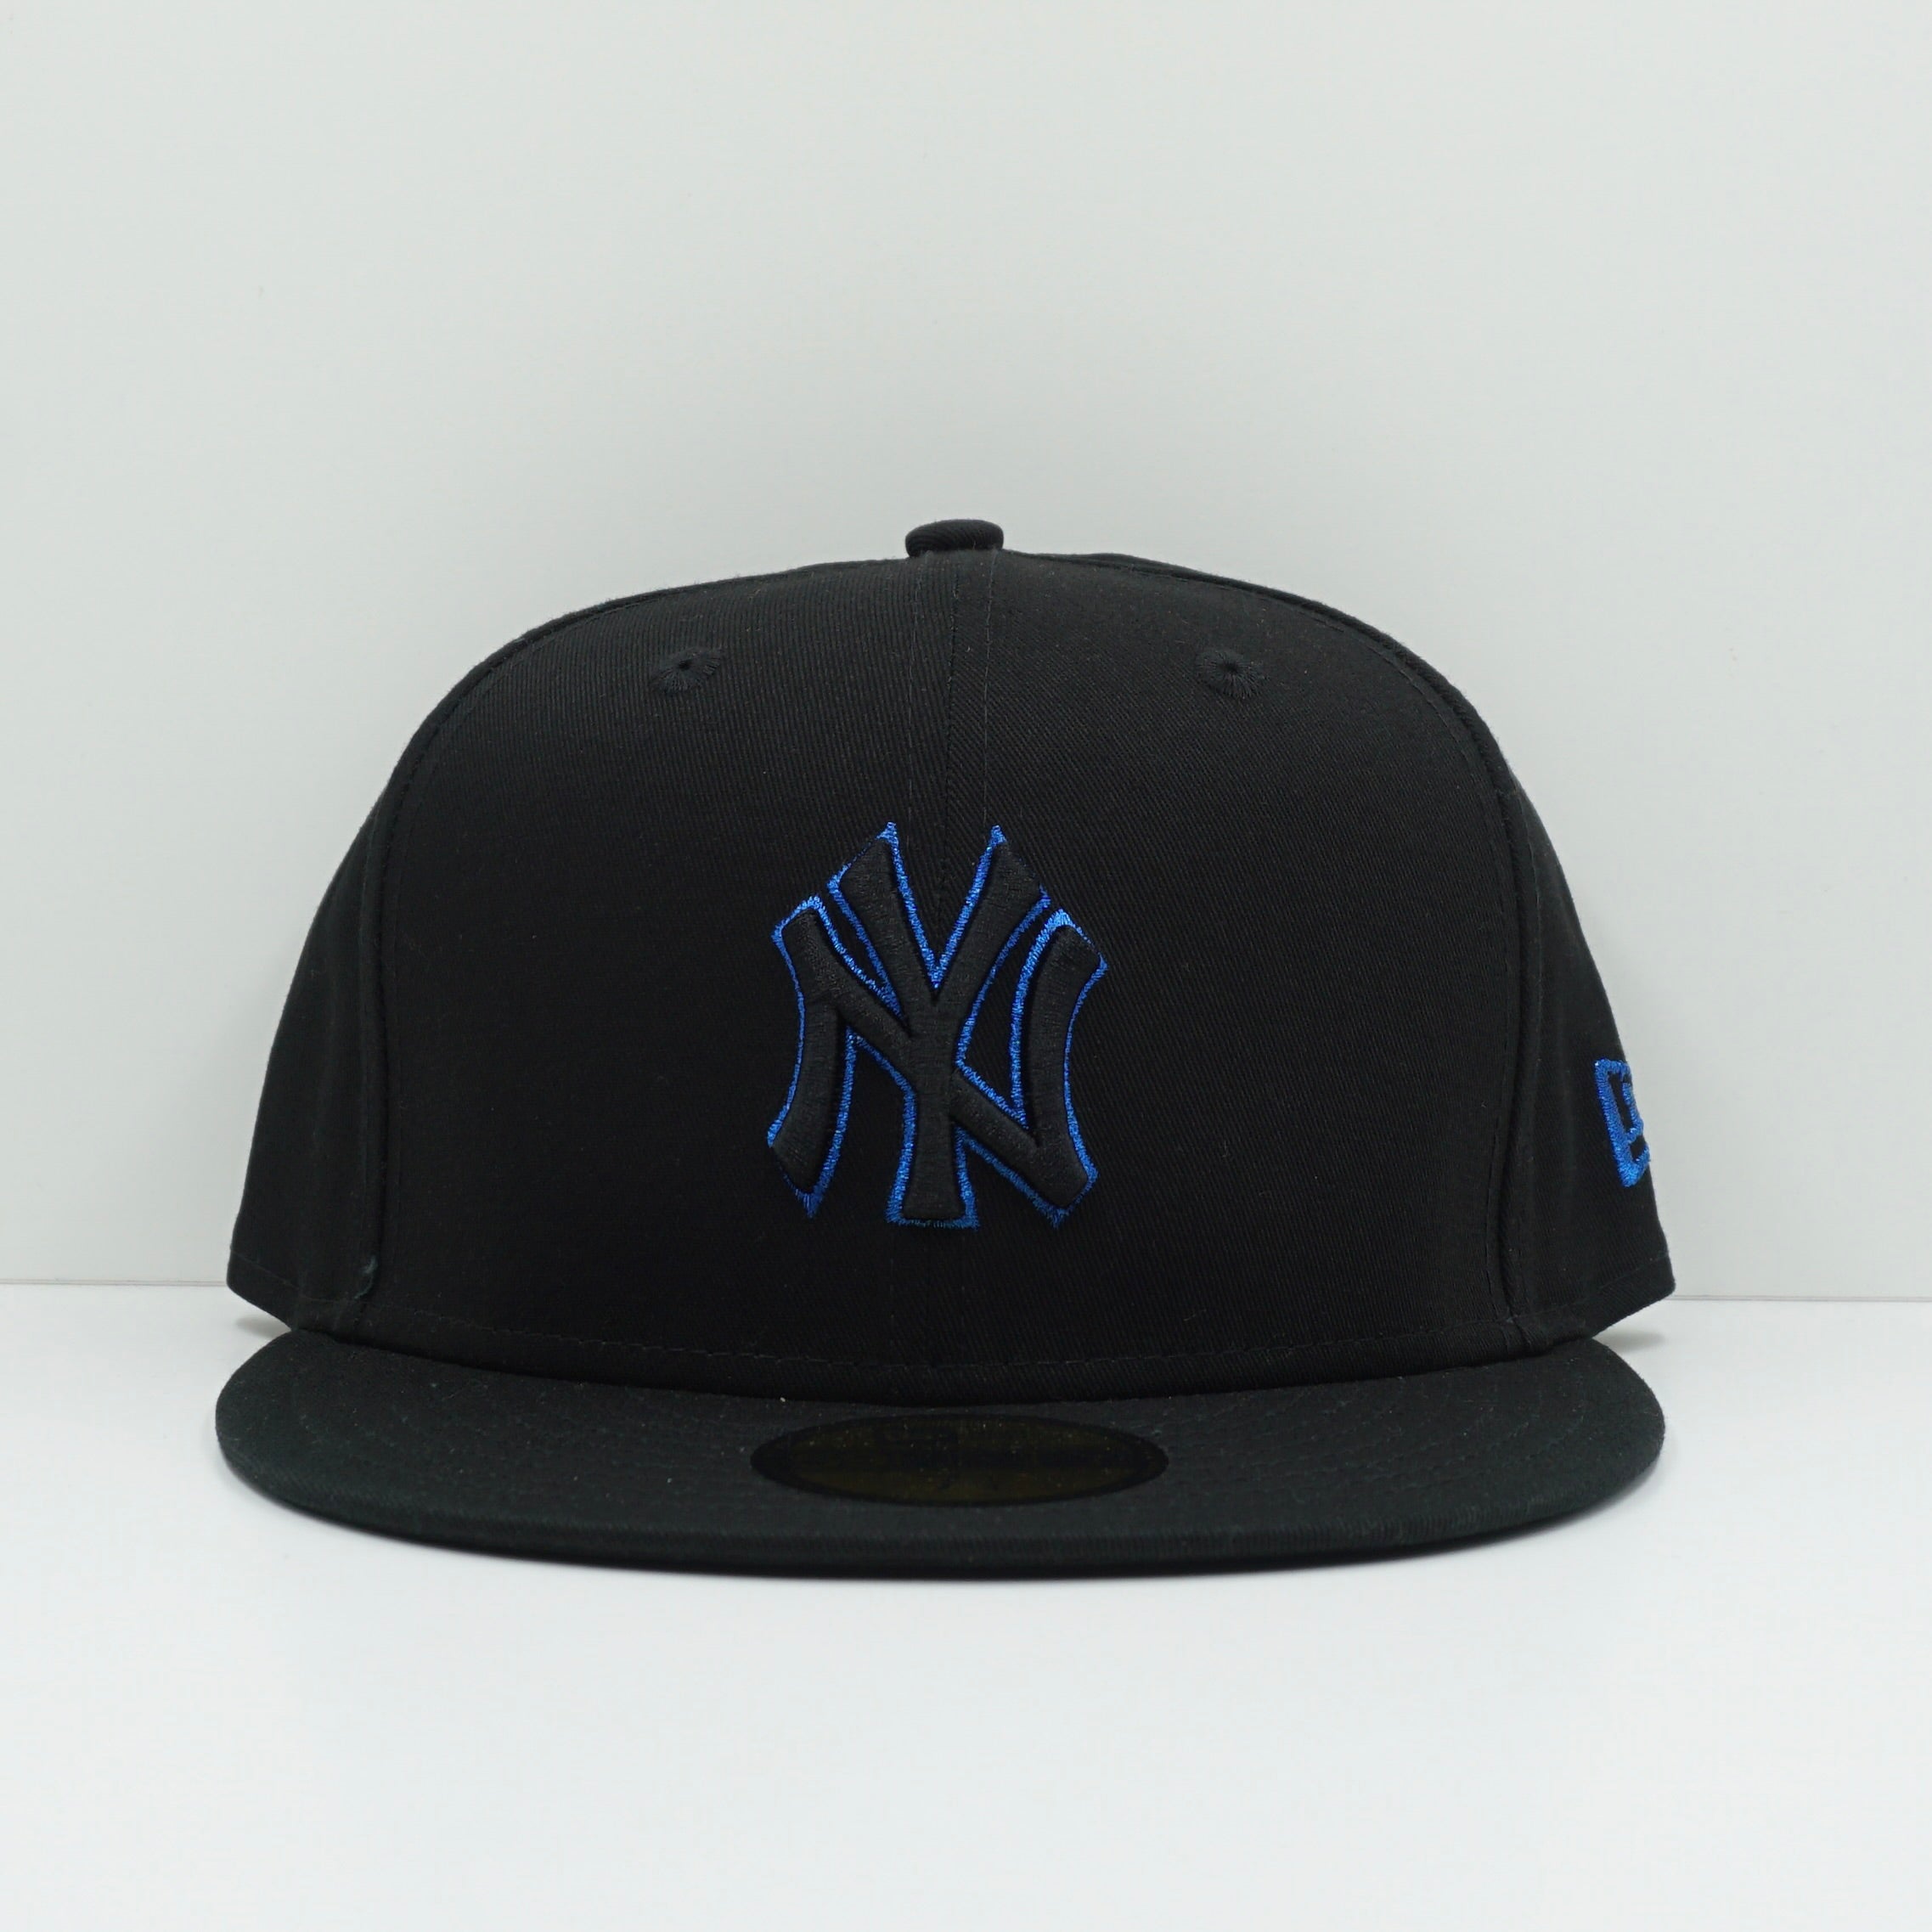 New Era New York Yankees Black/Blue Fitted Cap